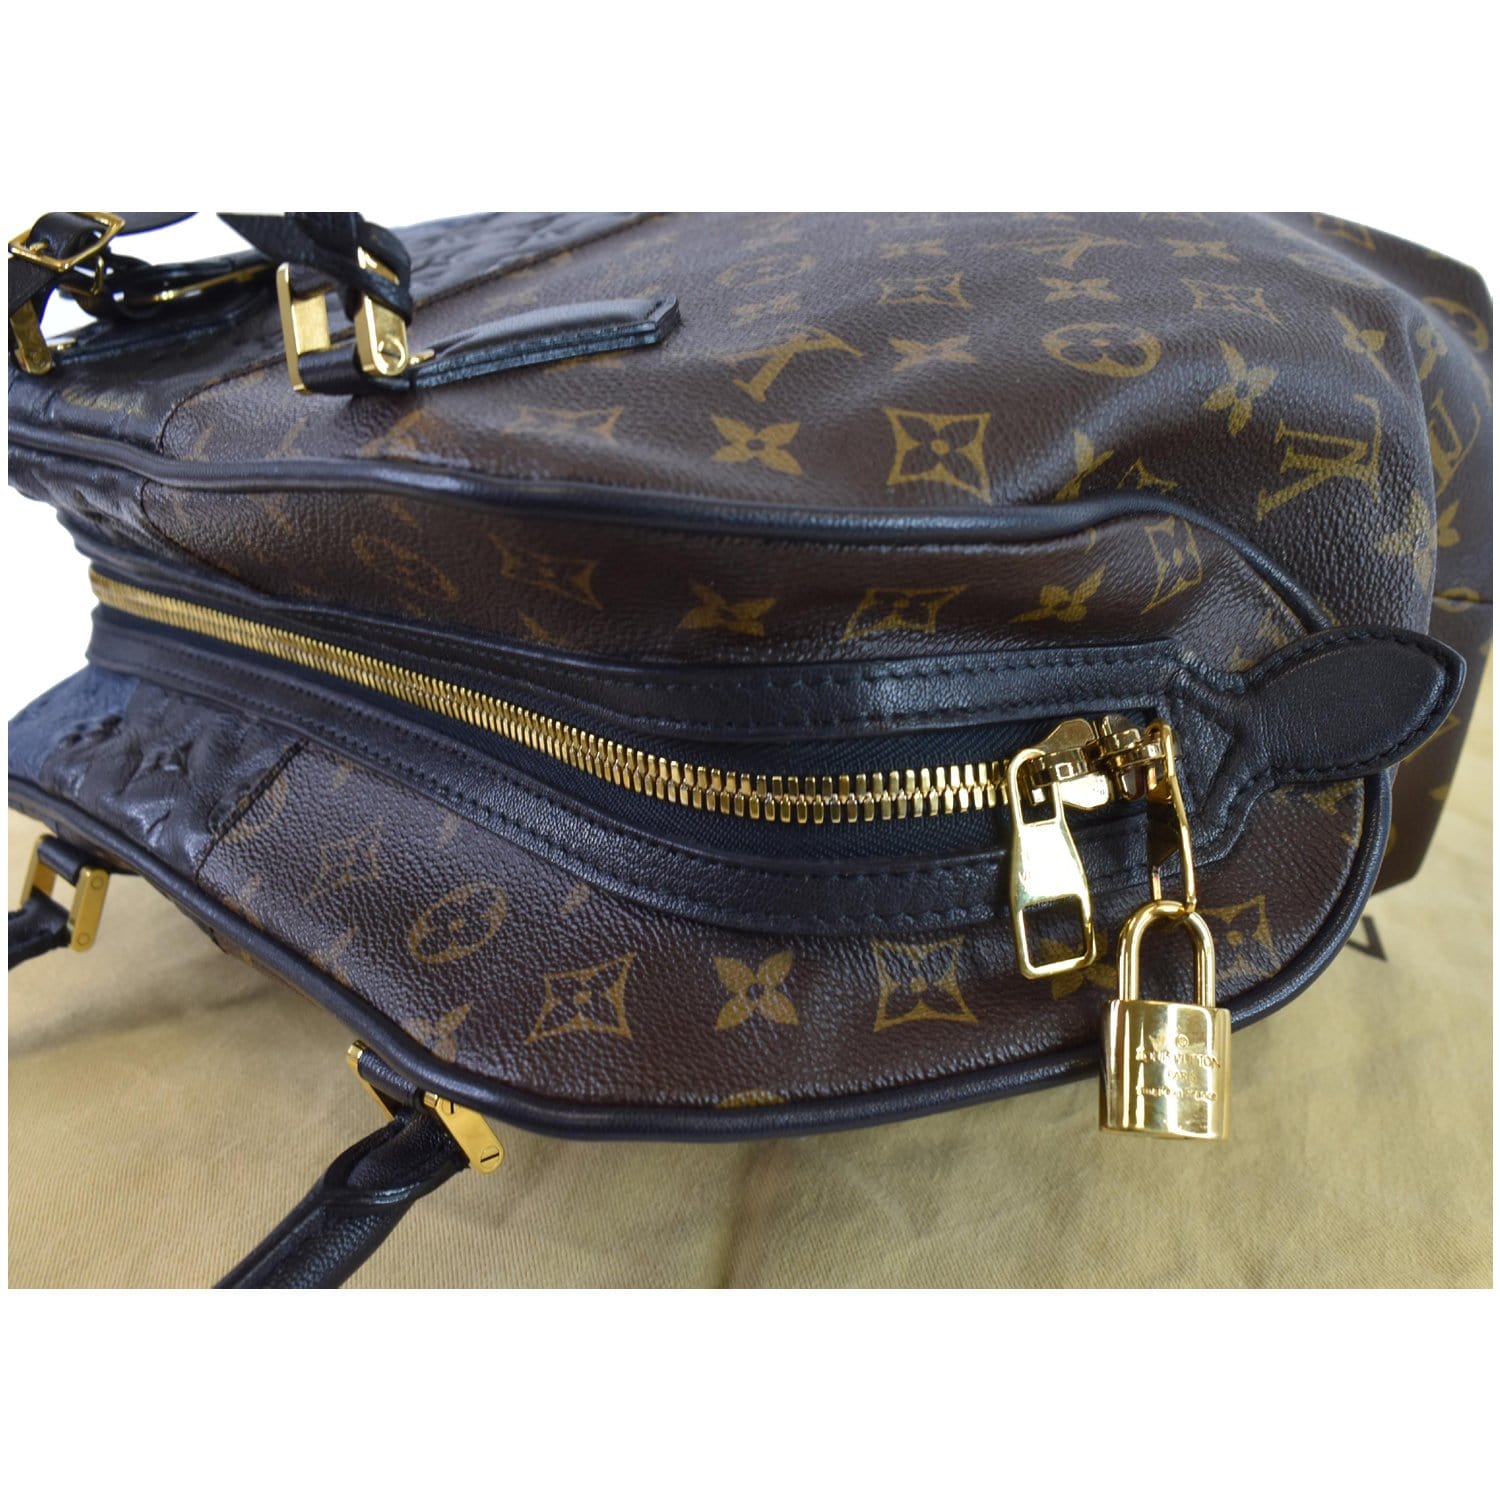 Used Louis Vuitton Tote Bag /Pvc/Brw/Whole Pattern